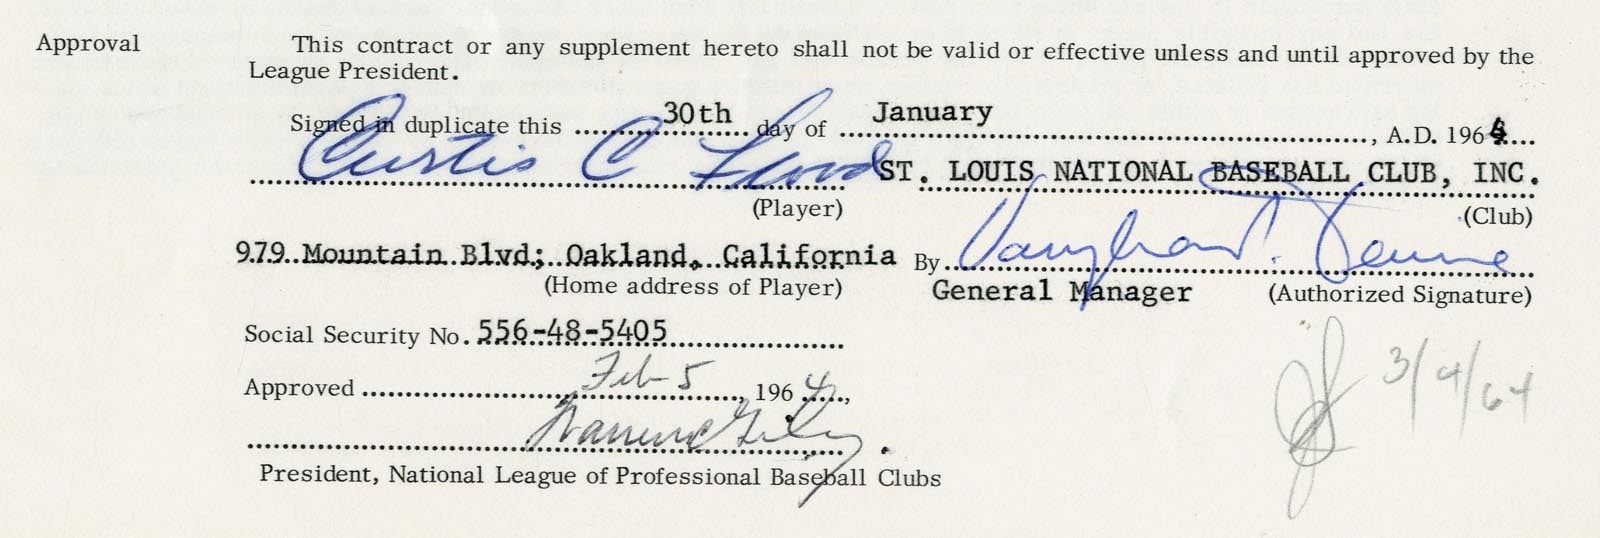 - 1964 Curt Flood Signed Cardinals Uniform Player's Contract - Championship Season